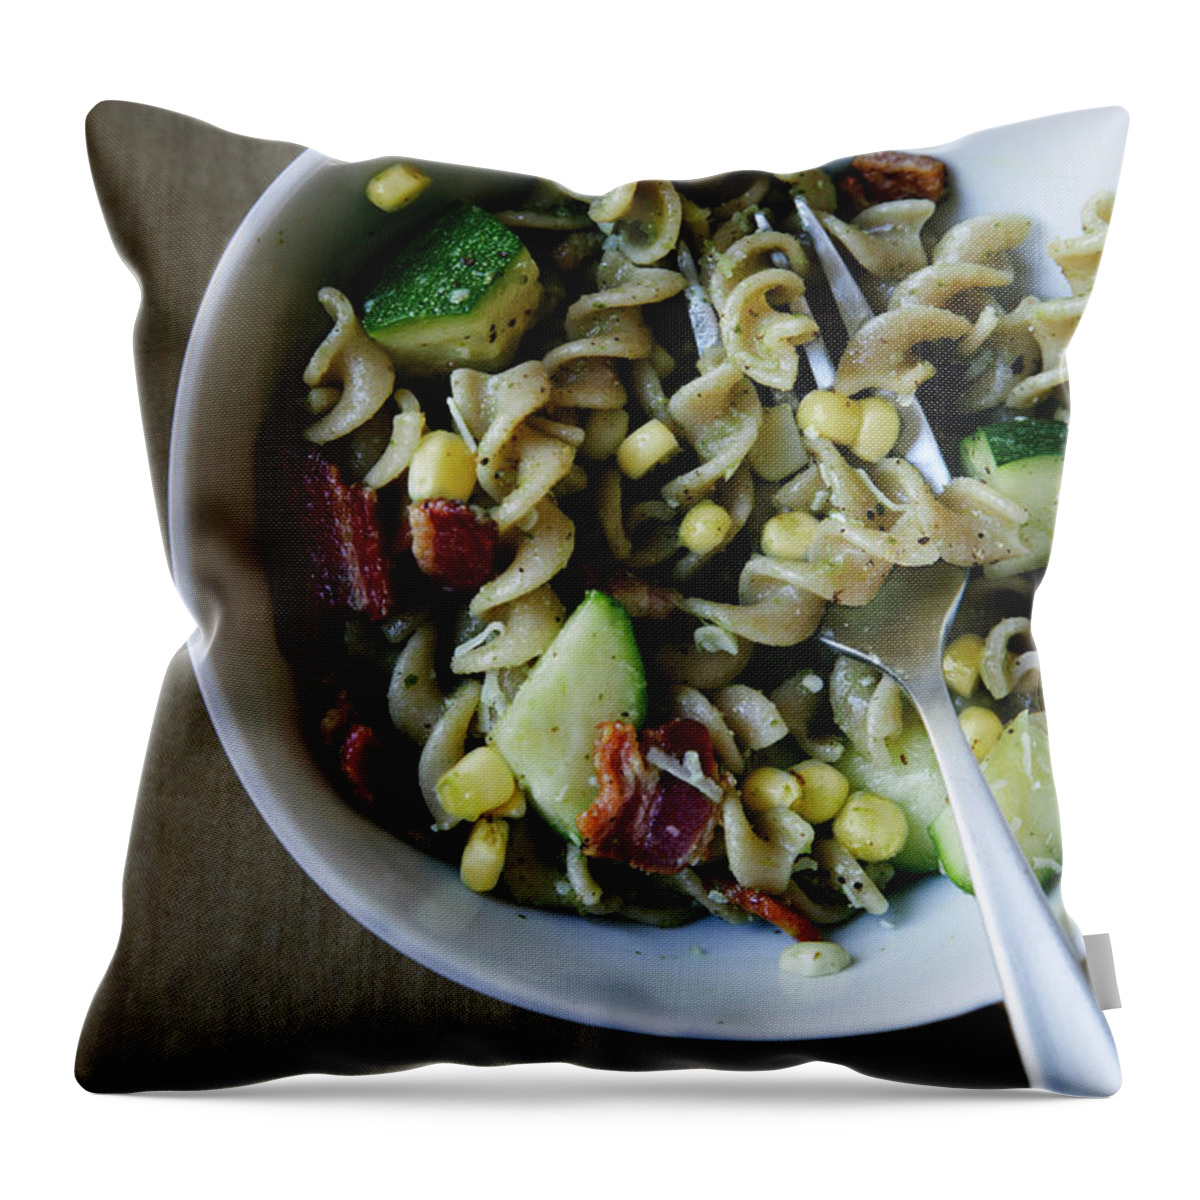 San Francisco Throw Pillow featuring the photograph Vegetable And Pasta Salad by Karen Beard